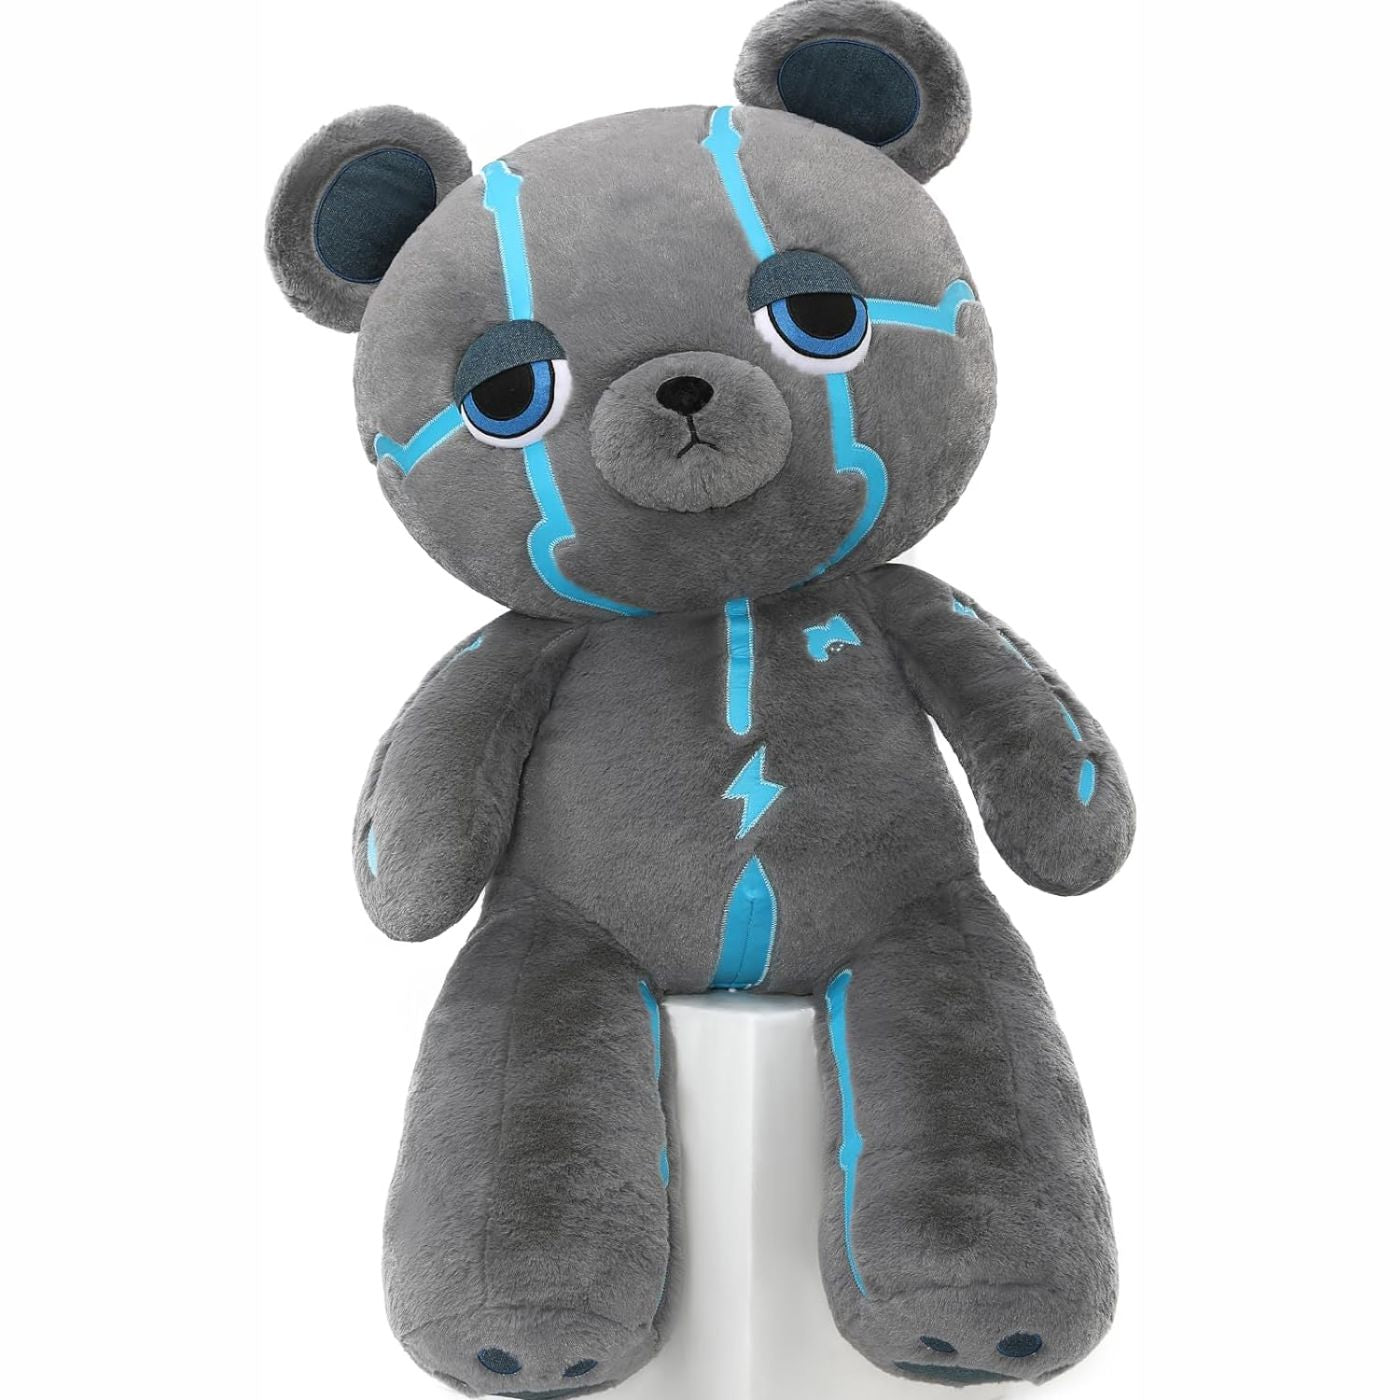 Luminous Teddy Bear Plush Toy, 35.4 Inches